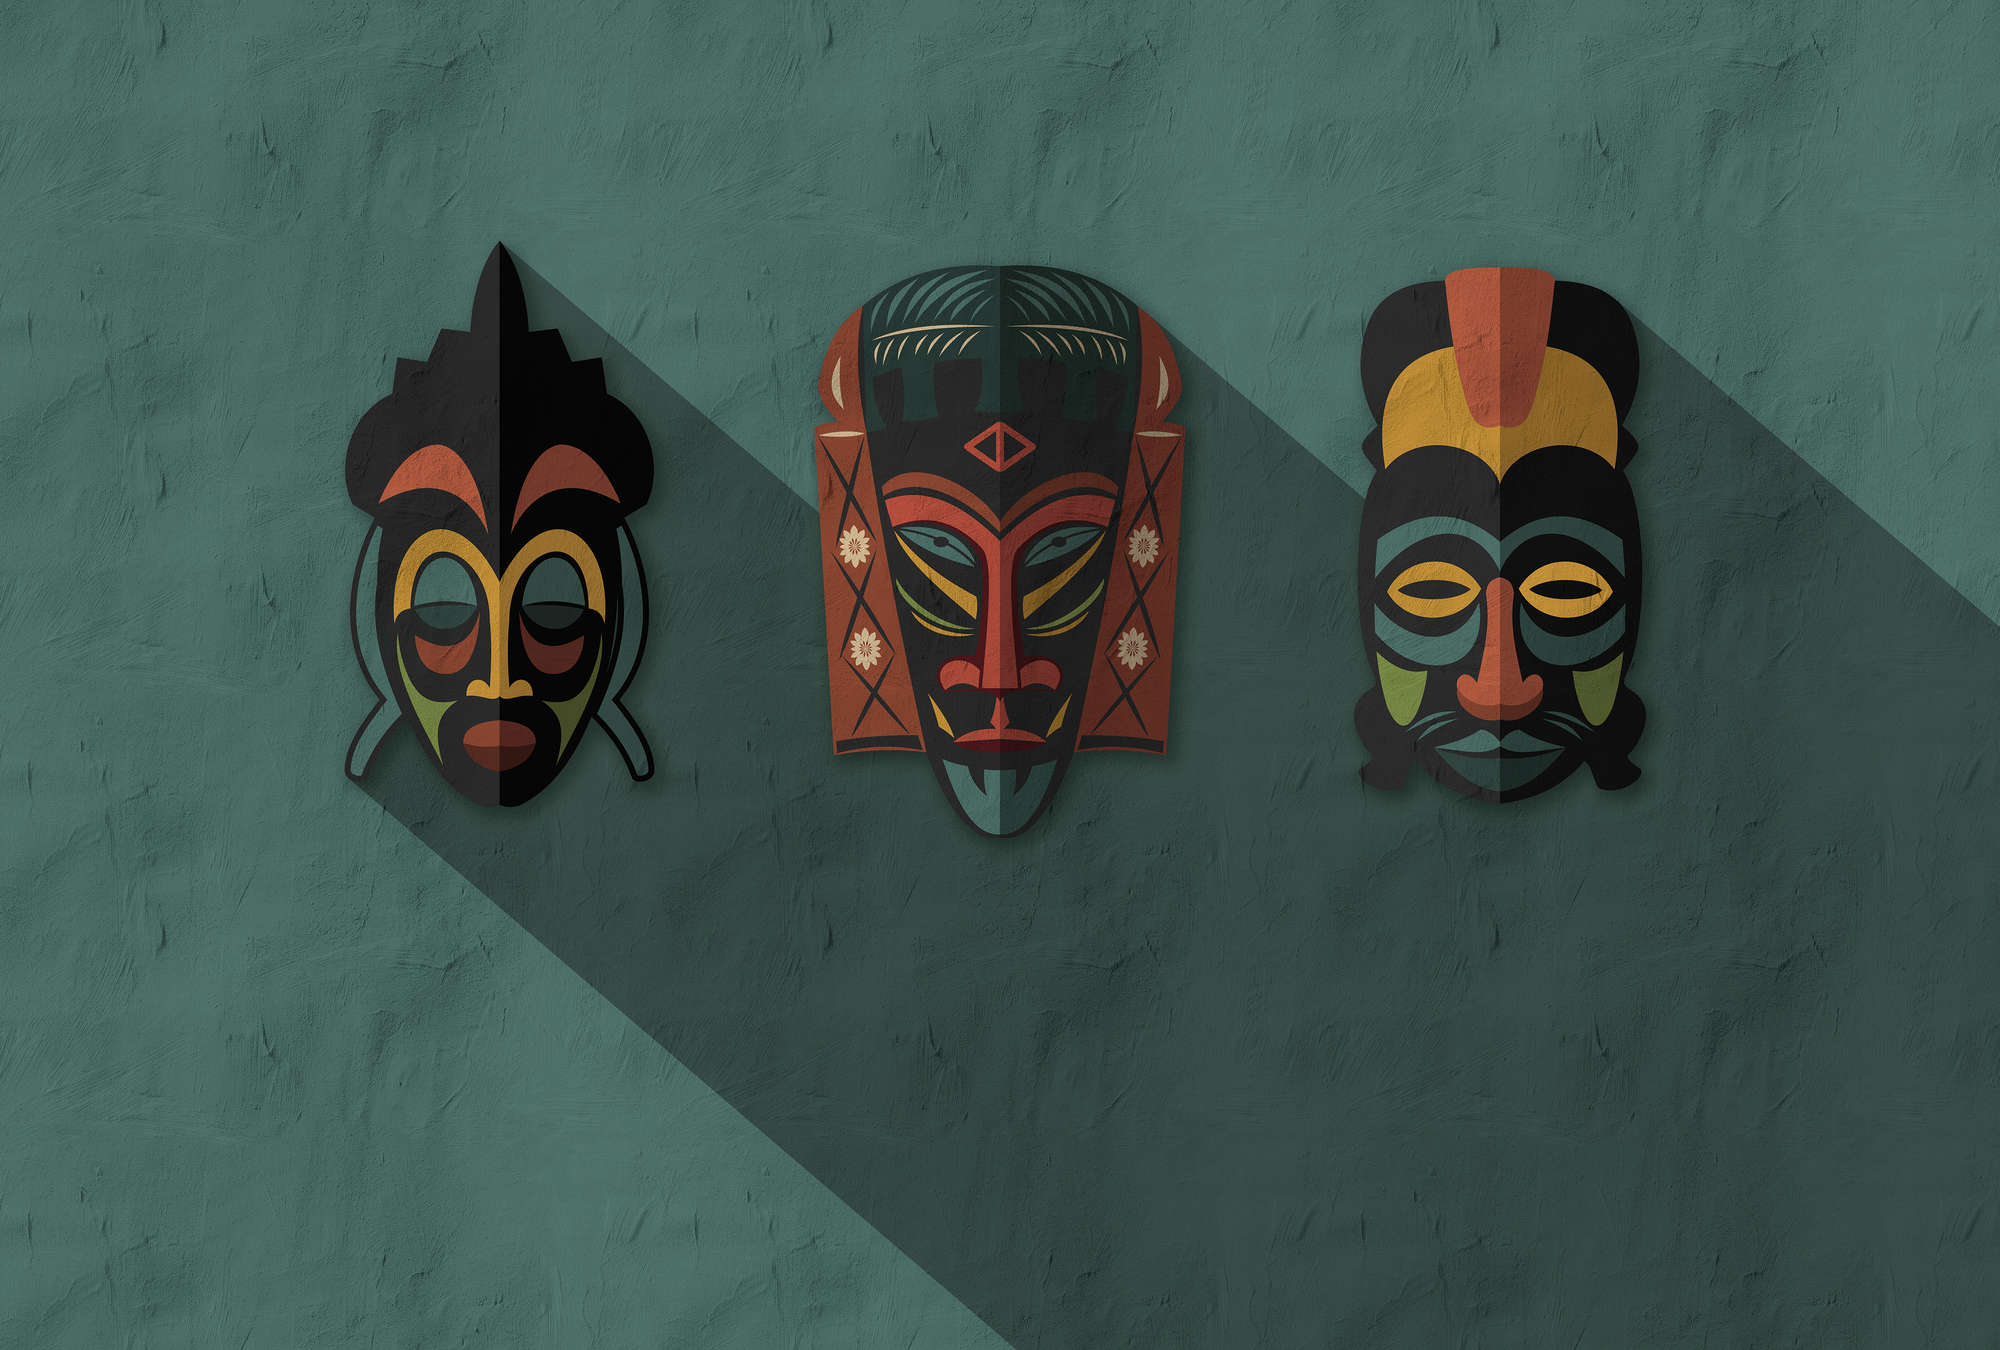             Zulu 3 - Muurschildering Petrol Afrika Maskers Zulu Design
        